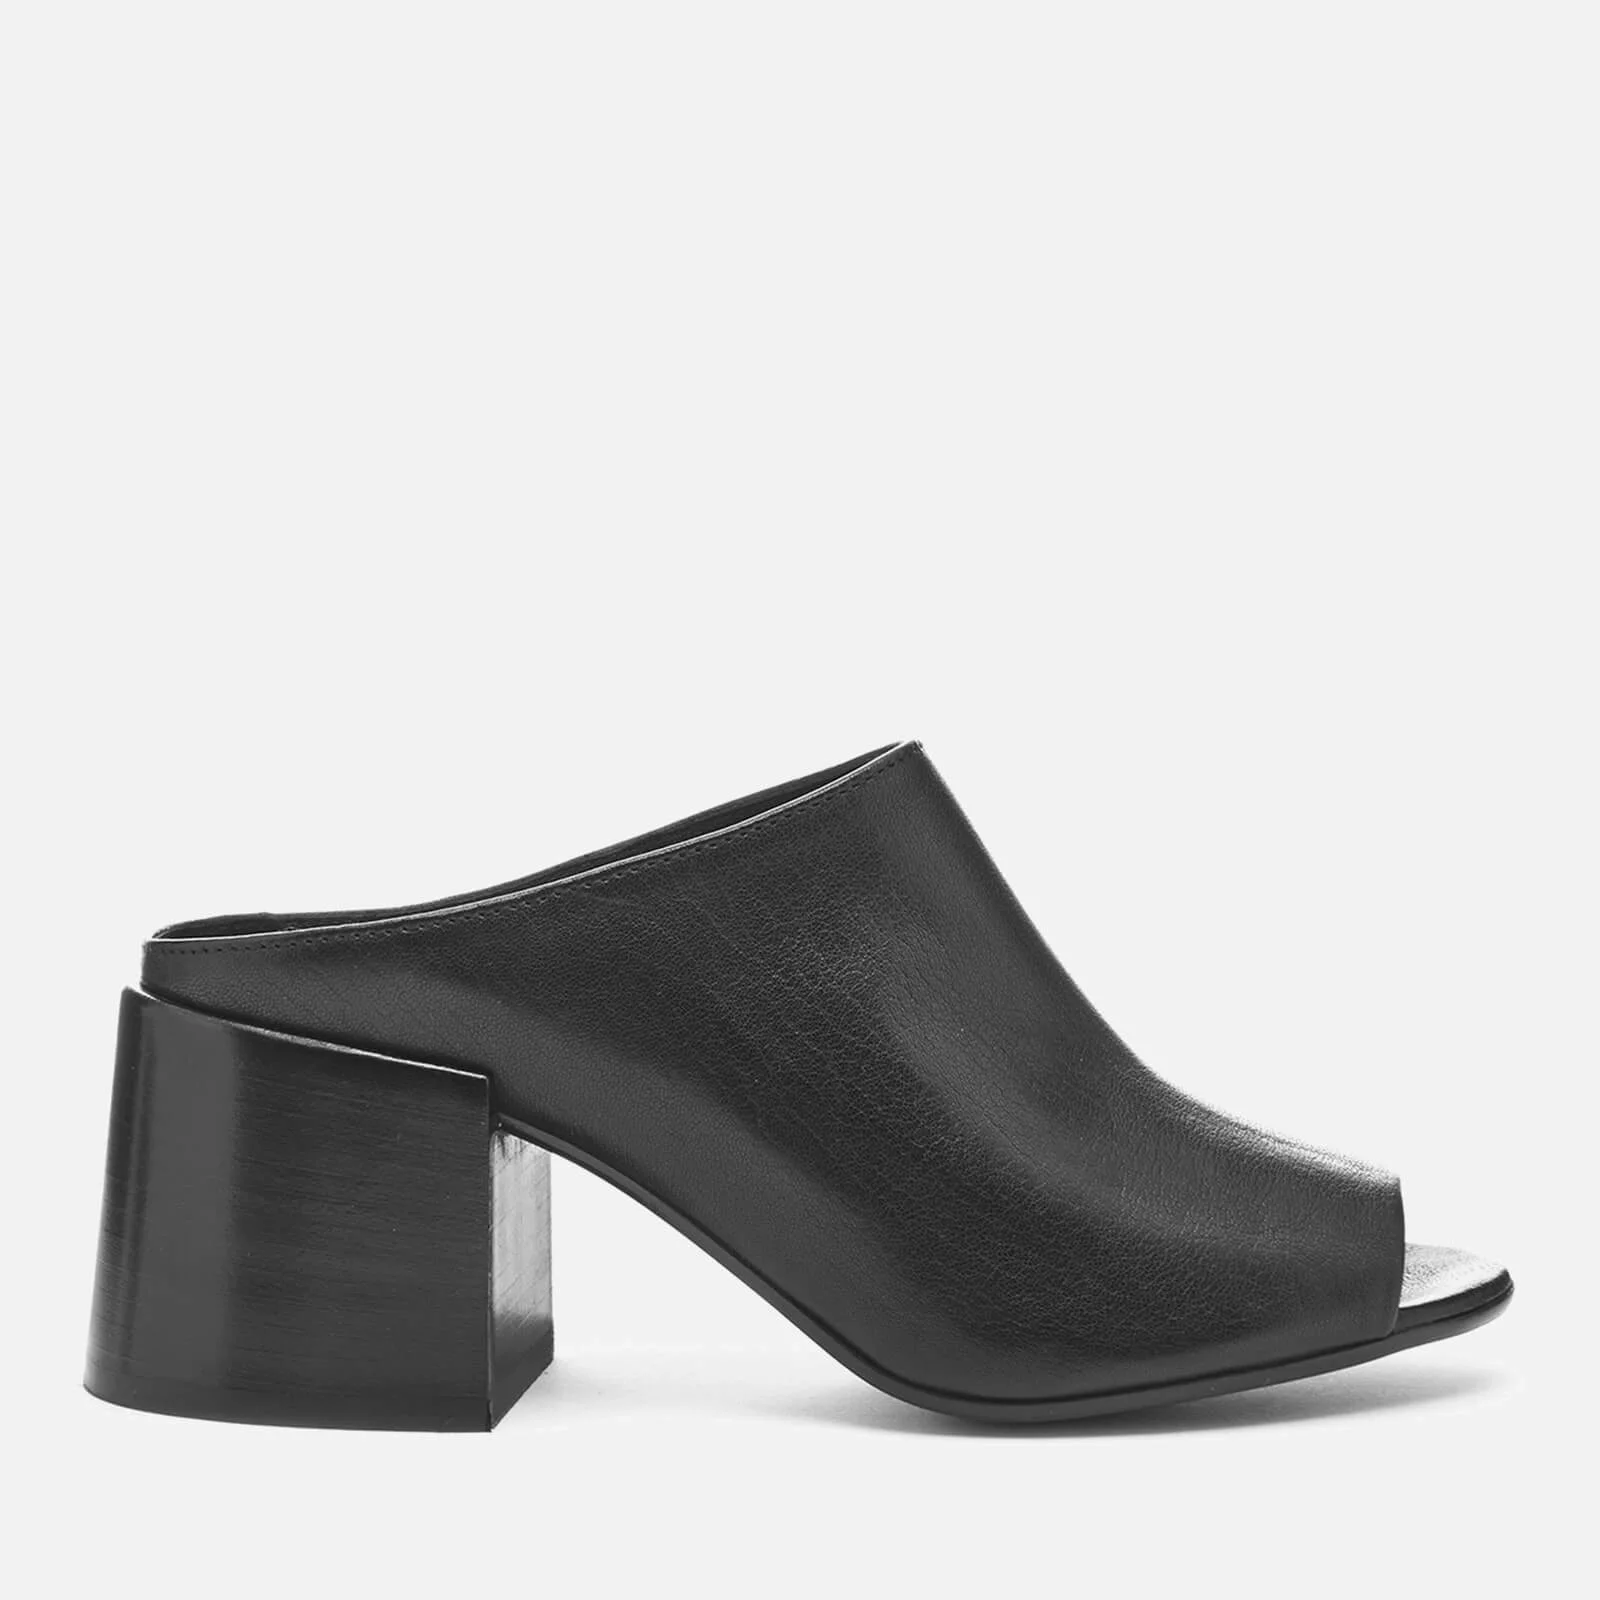 MM6 Maison Margiela Women's Open Toe Slip-On Block Heel Shoes - Black Image 1